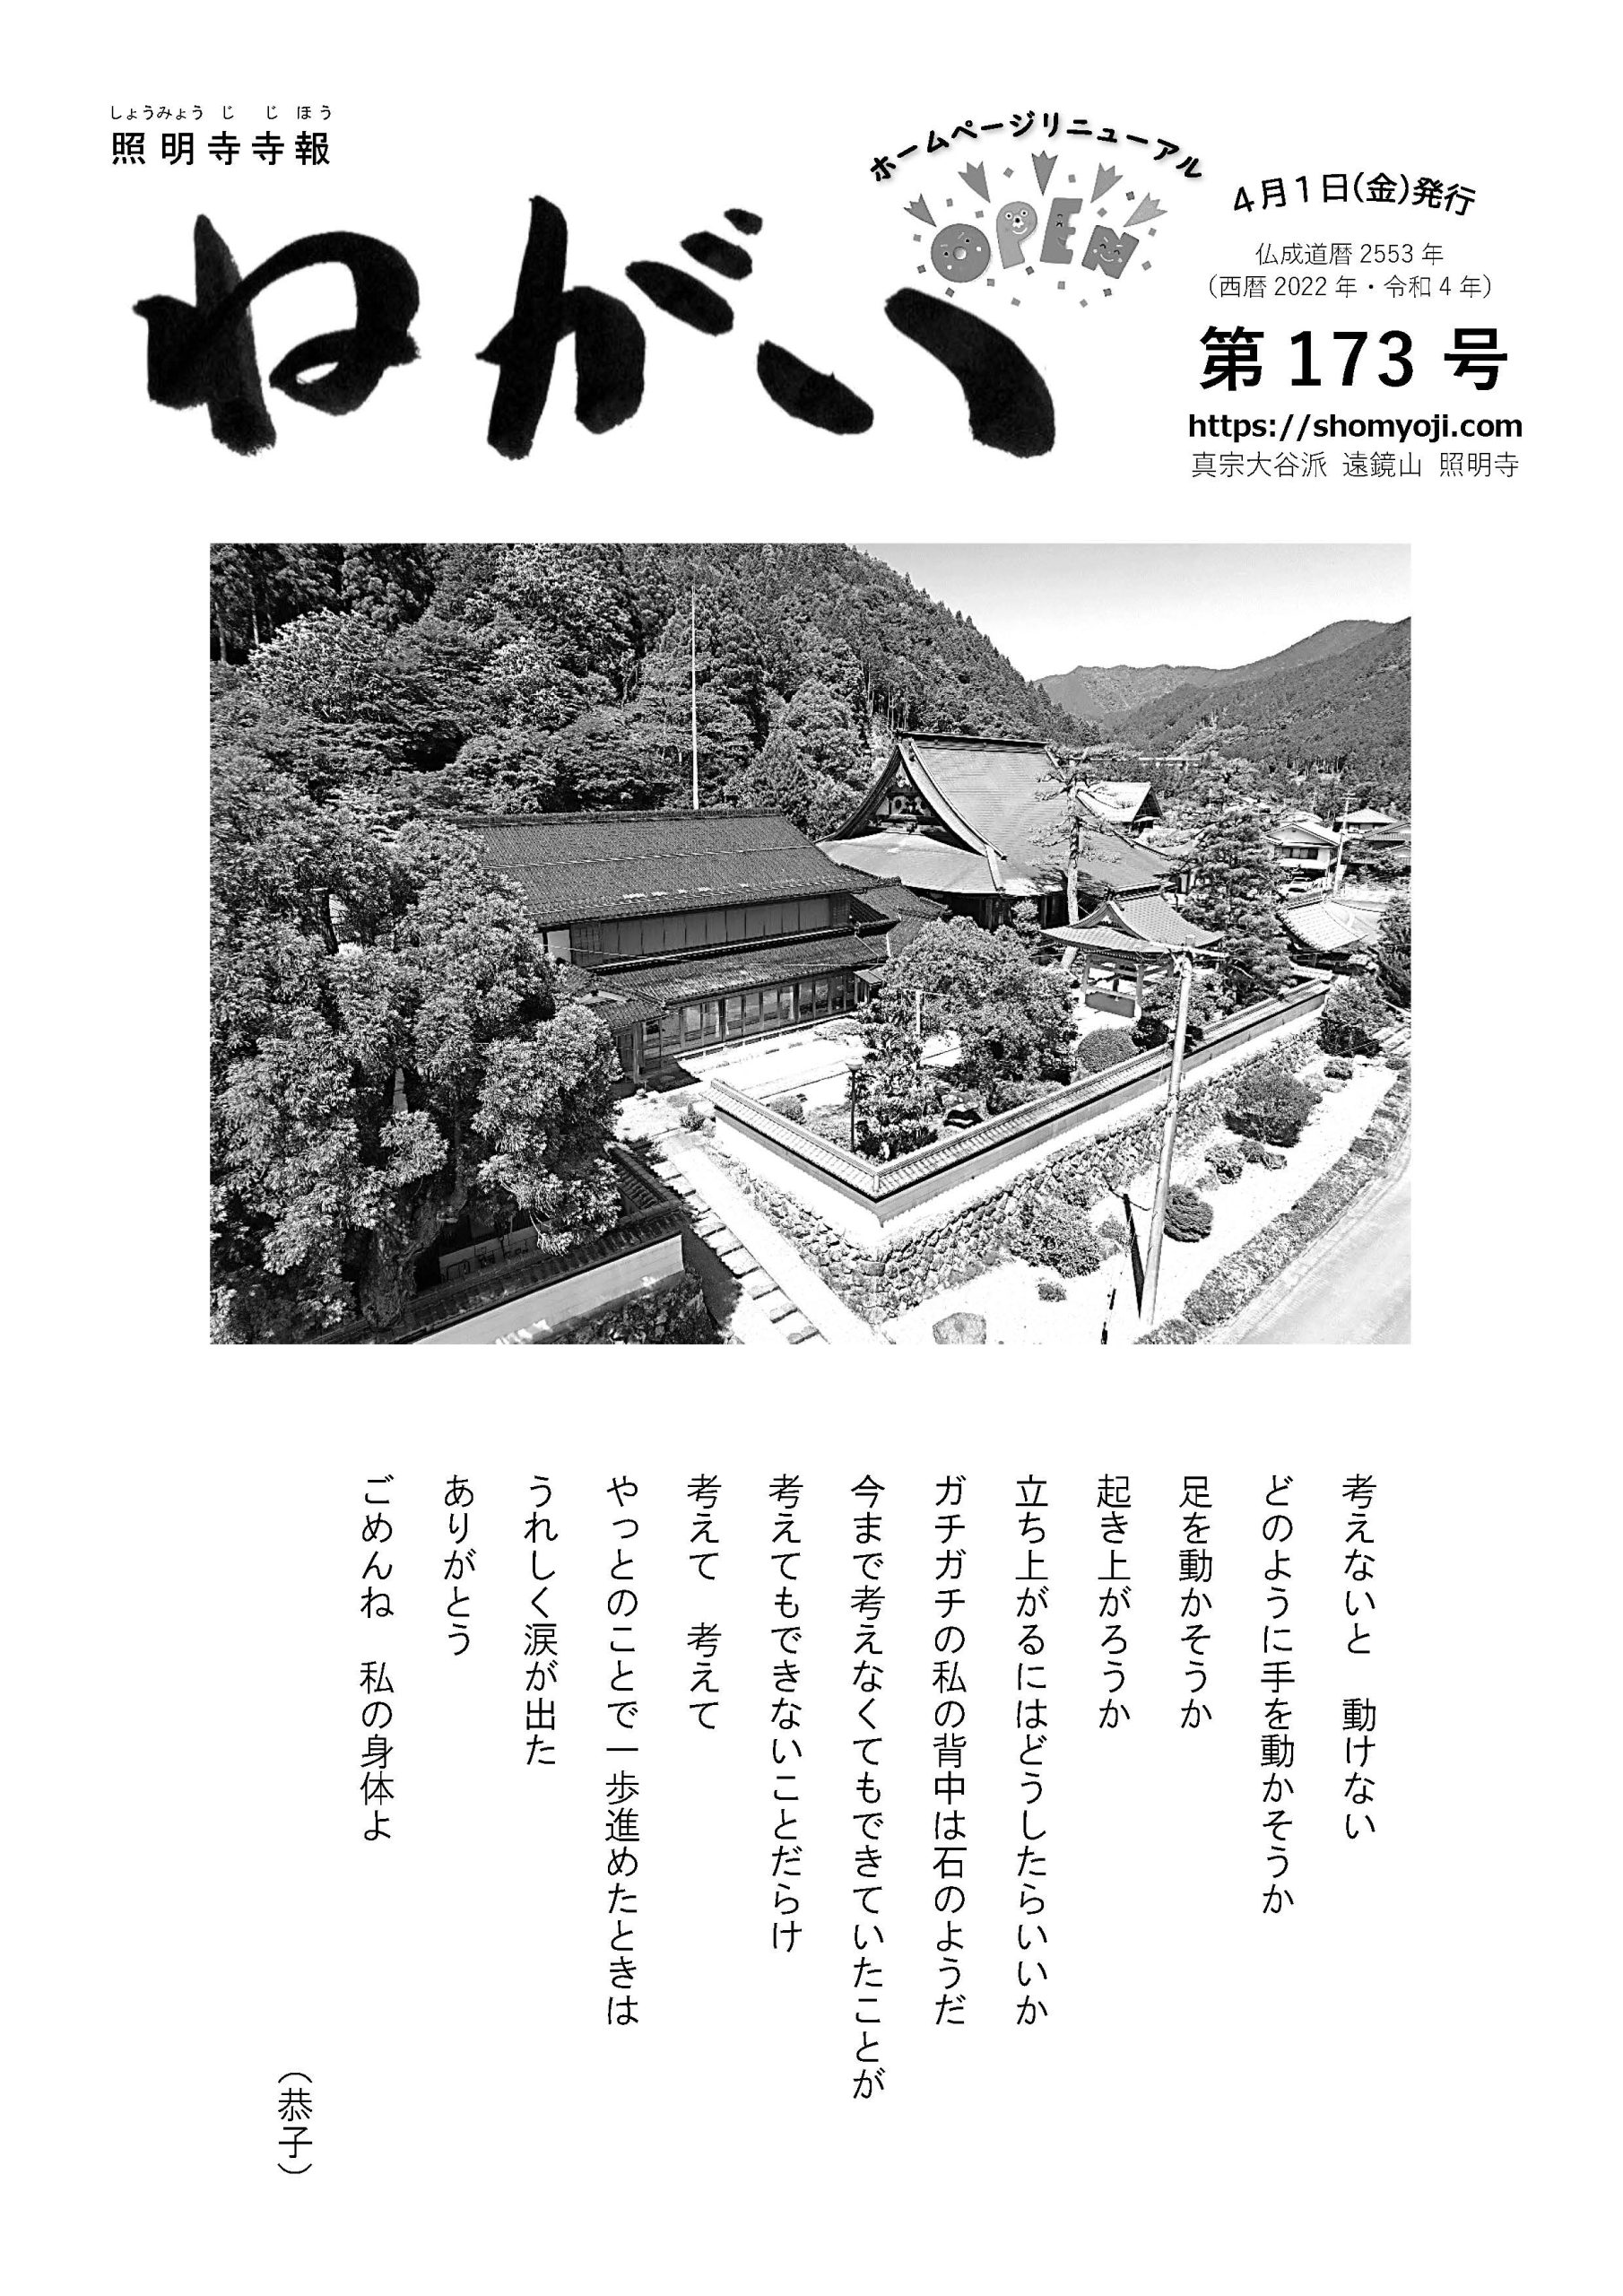 寺報「願い」 第173号 2022年4月1日発行